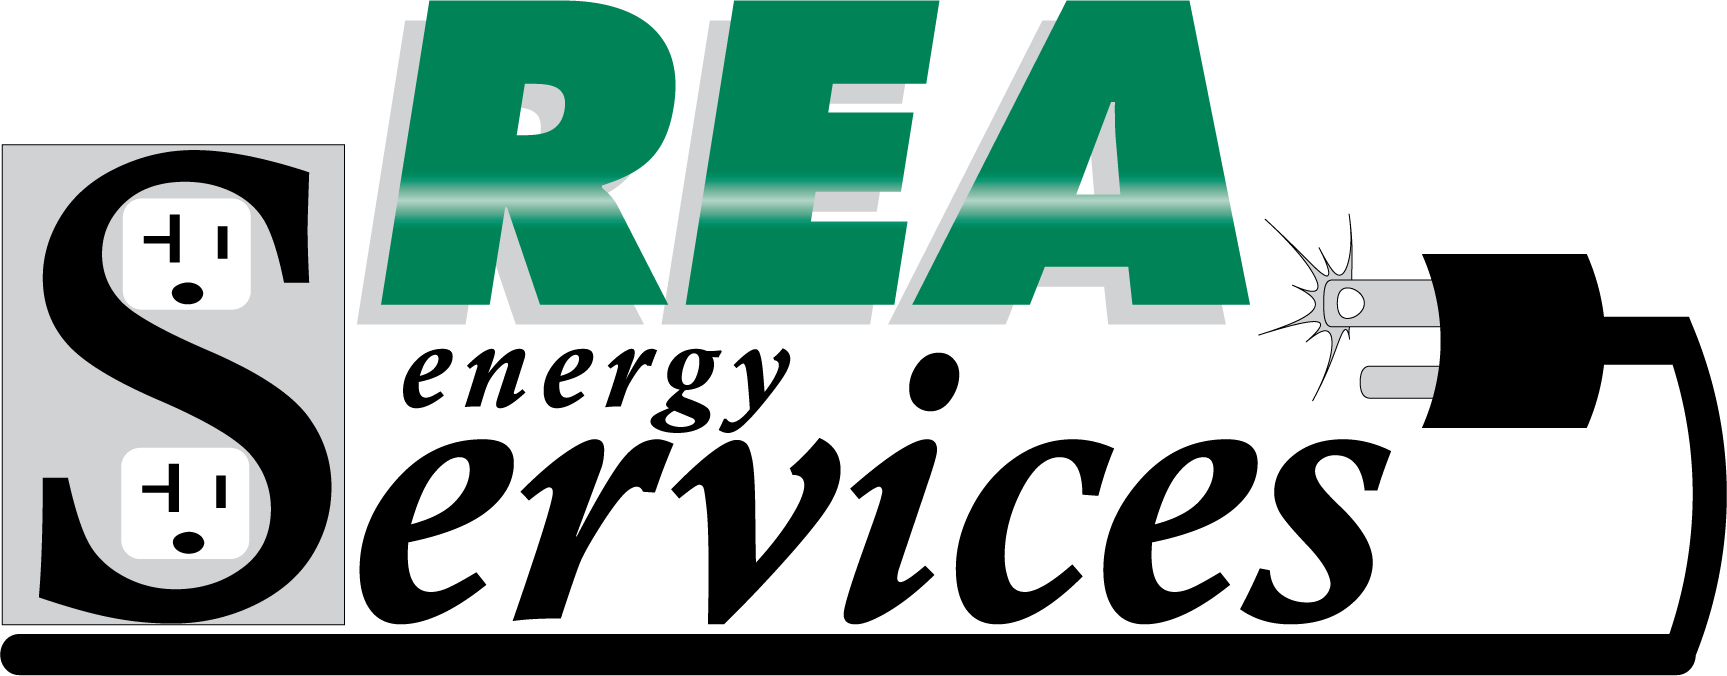 REA energy services